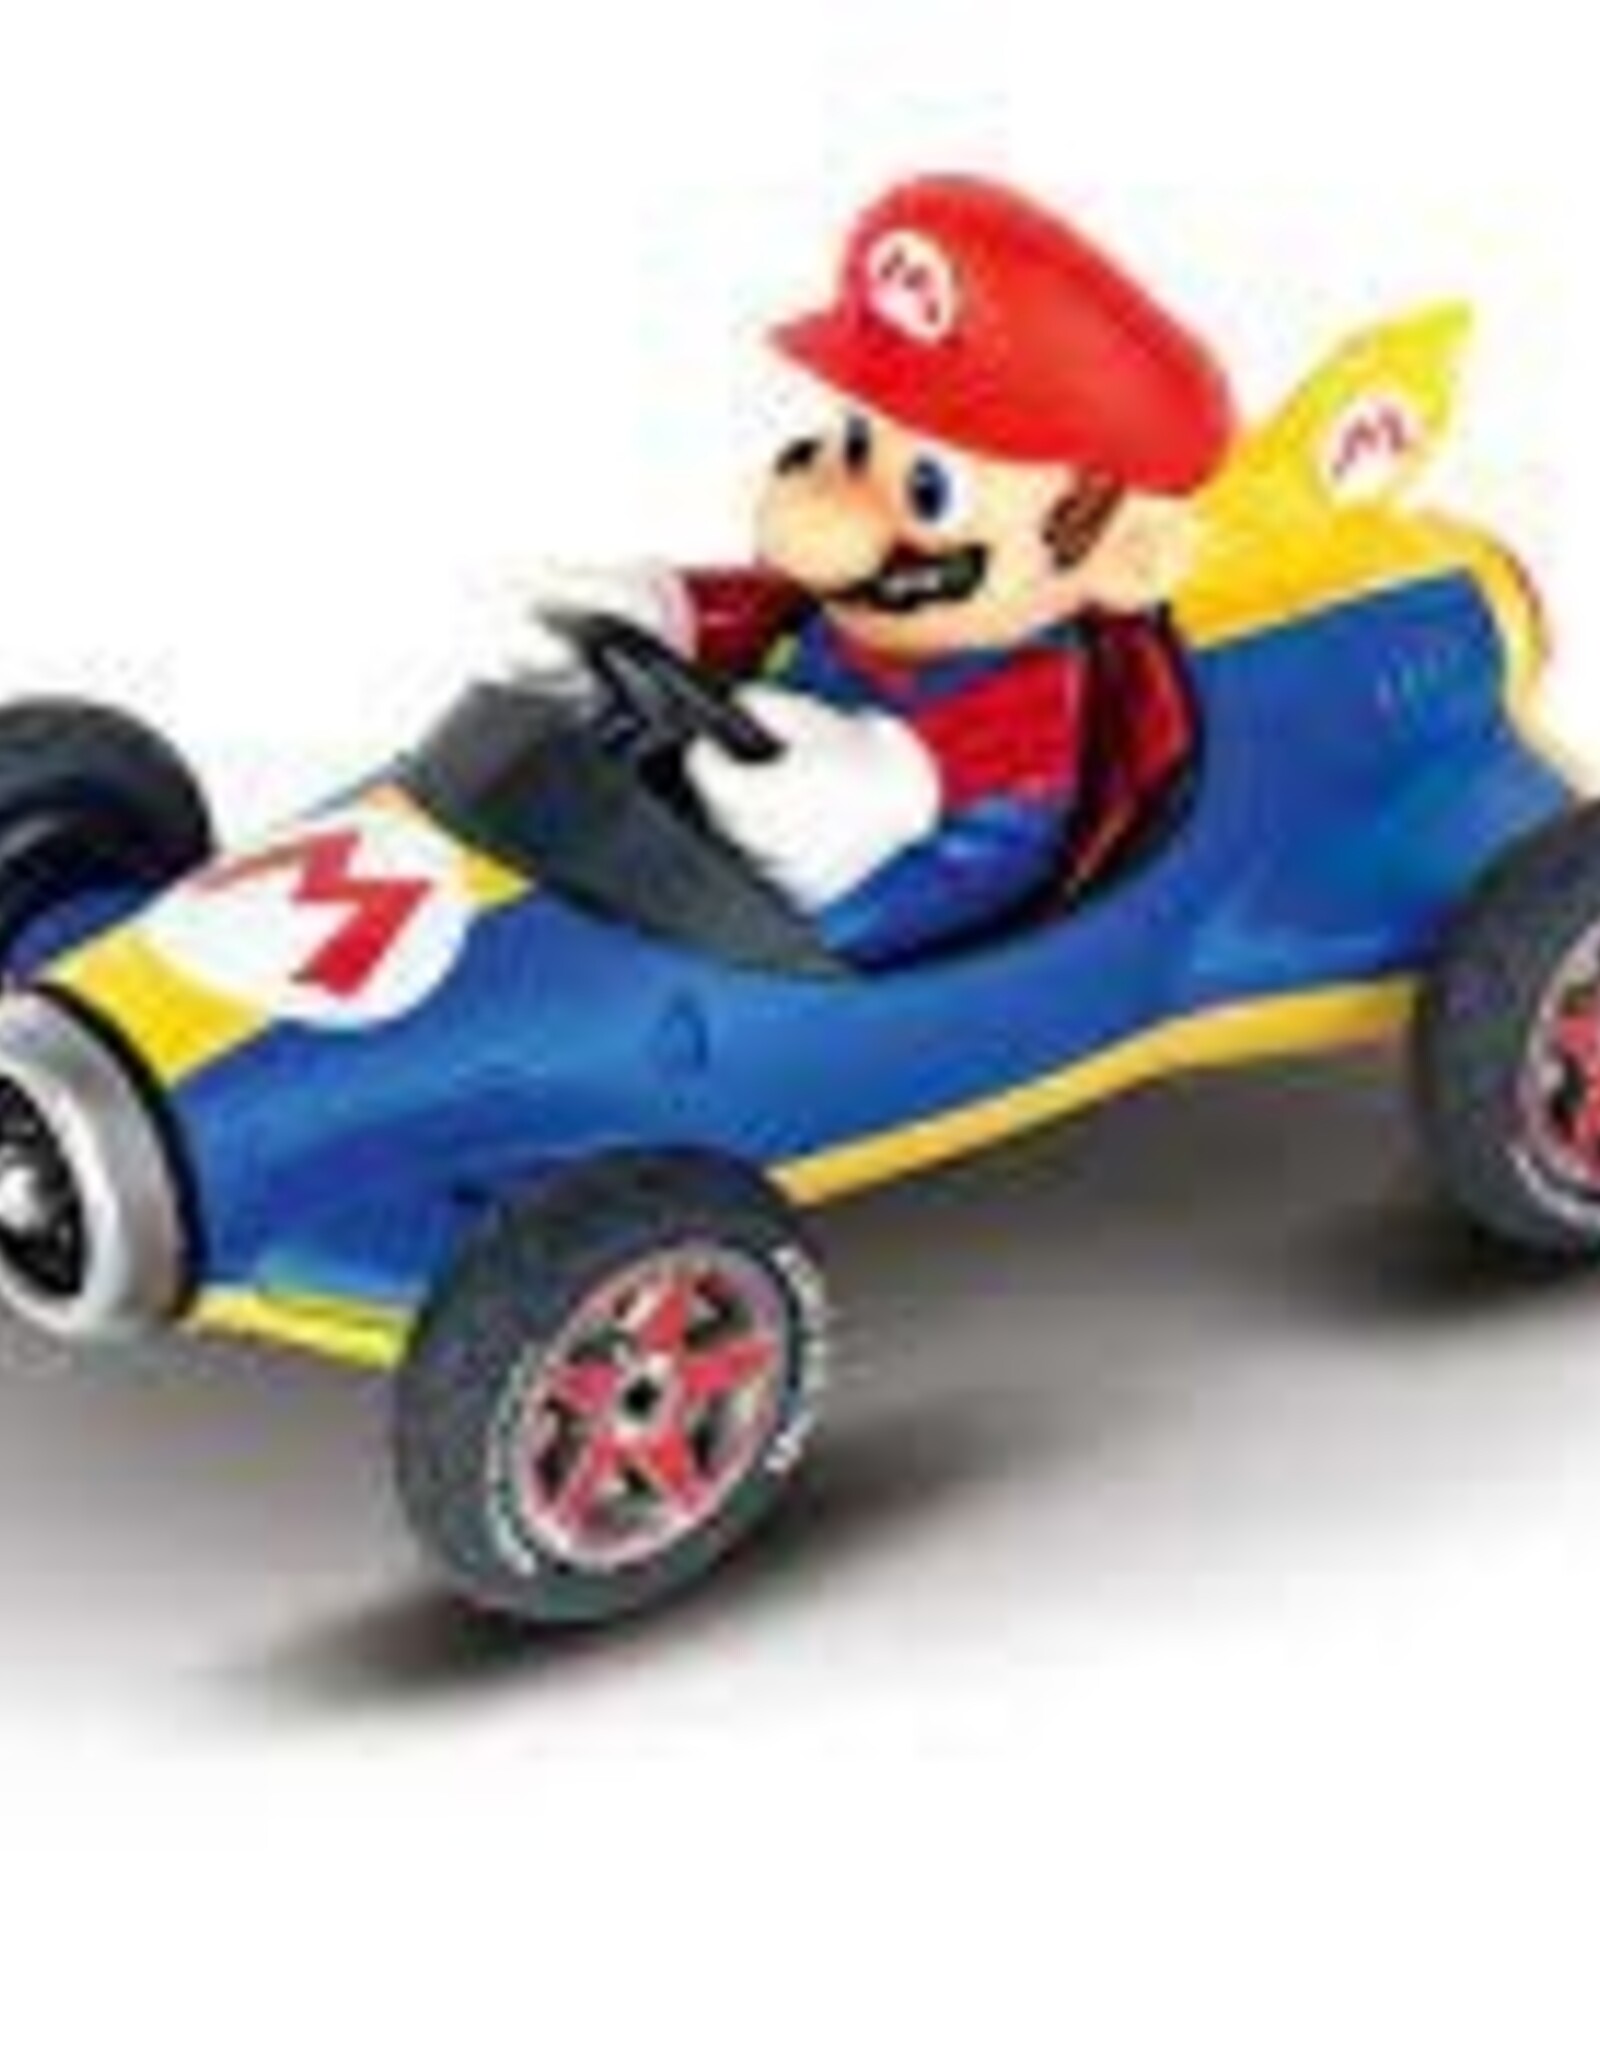 Carrera 2.4GHz Mario KartTM Mach 8, Mario